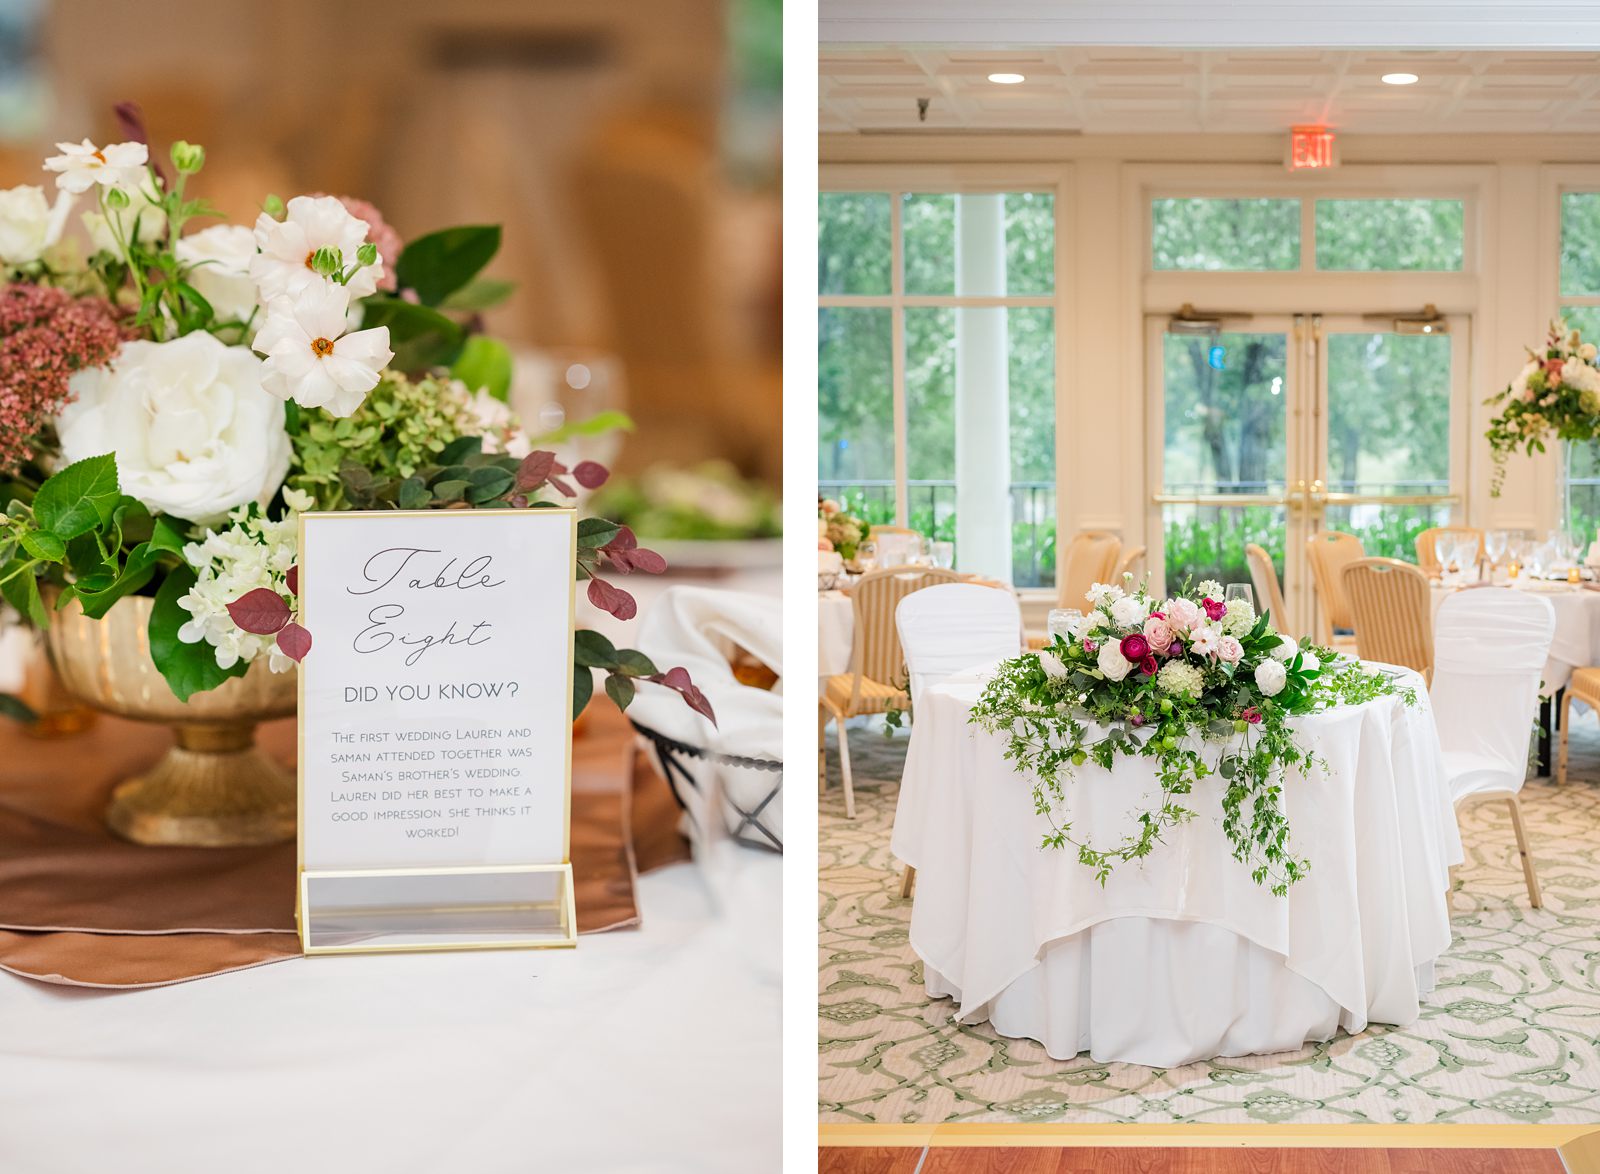 Elegant Reception Table Decor at Fall Hermitage Country Club Wedding Reception